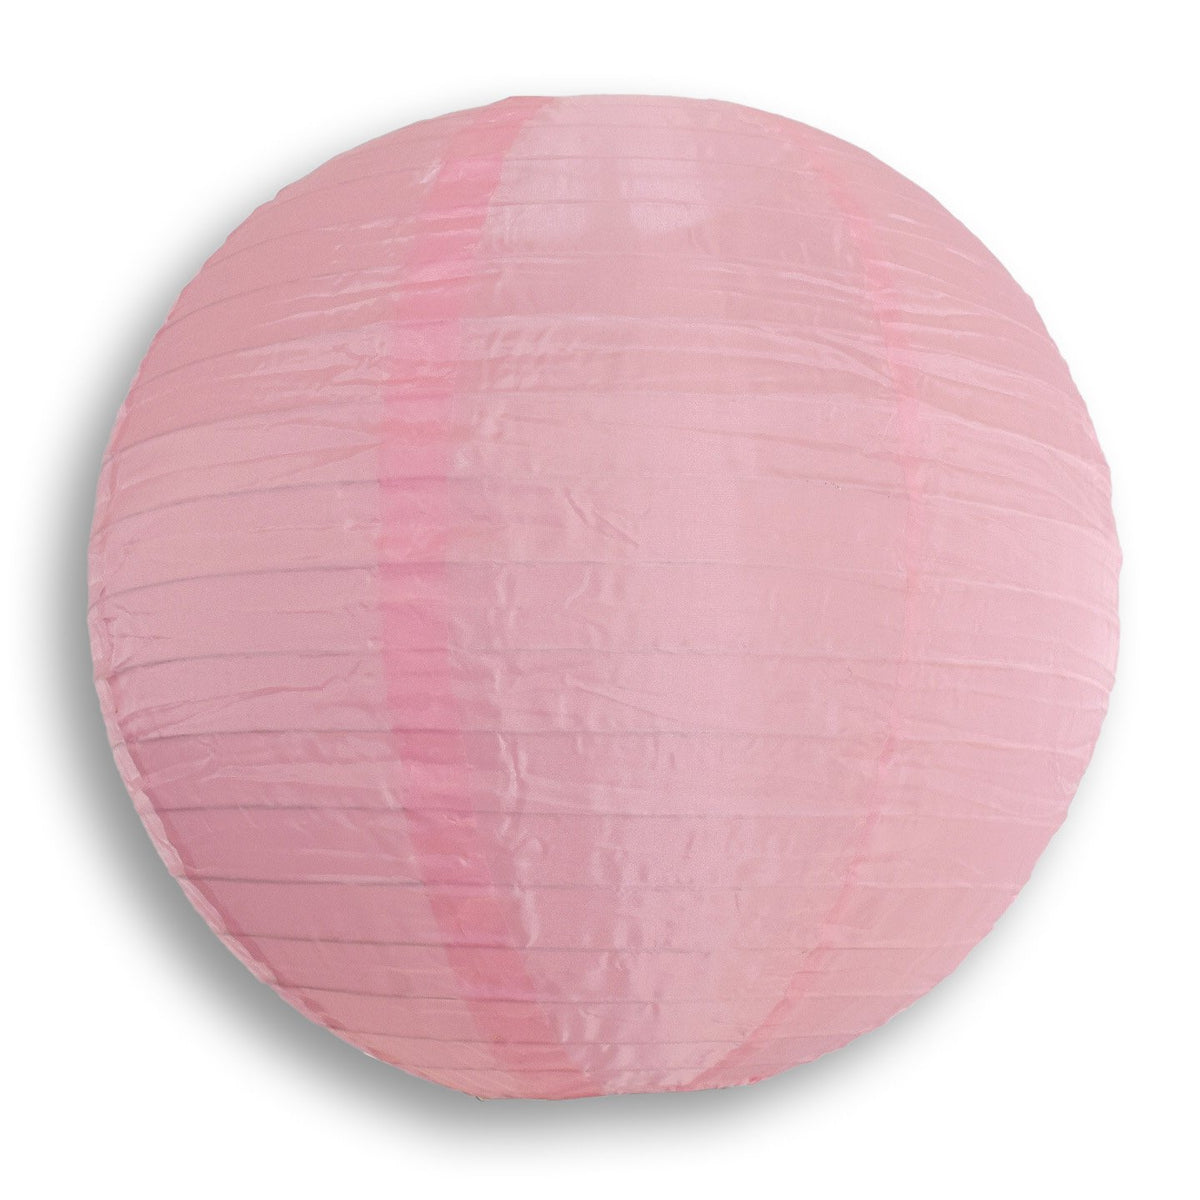 24 Inch Pink Shimmering Nylon Lantern, Even Ribbing, Durable, Hanging - LunaBazaar.com - Discover. Celebrate. Decorate.